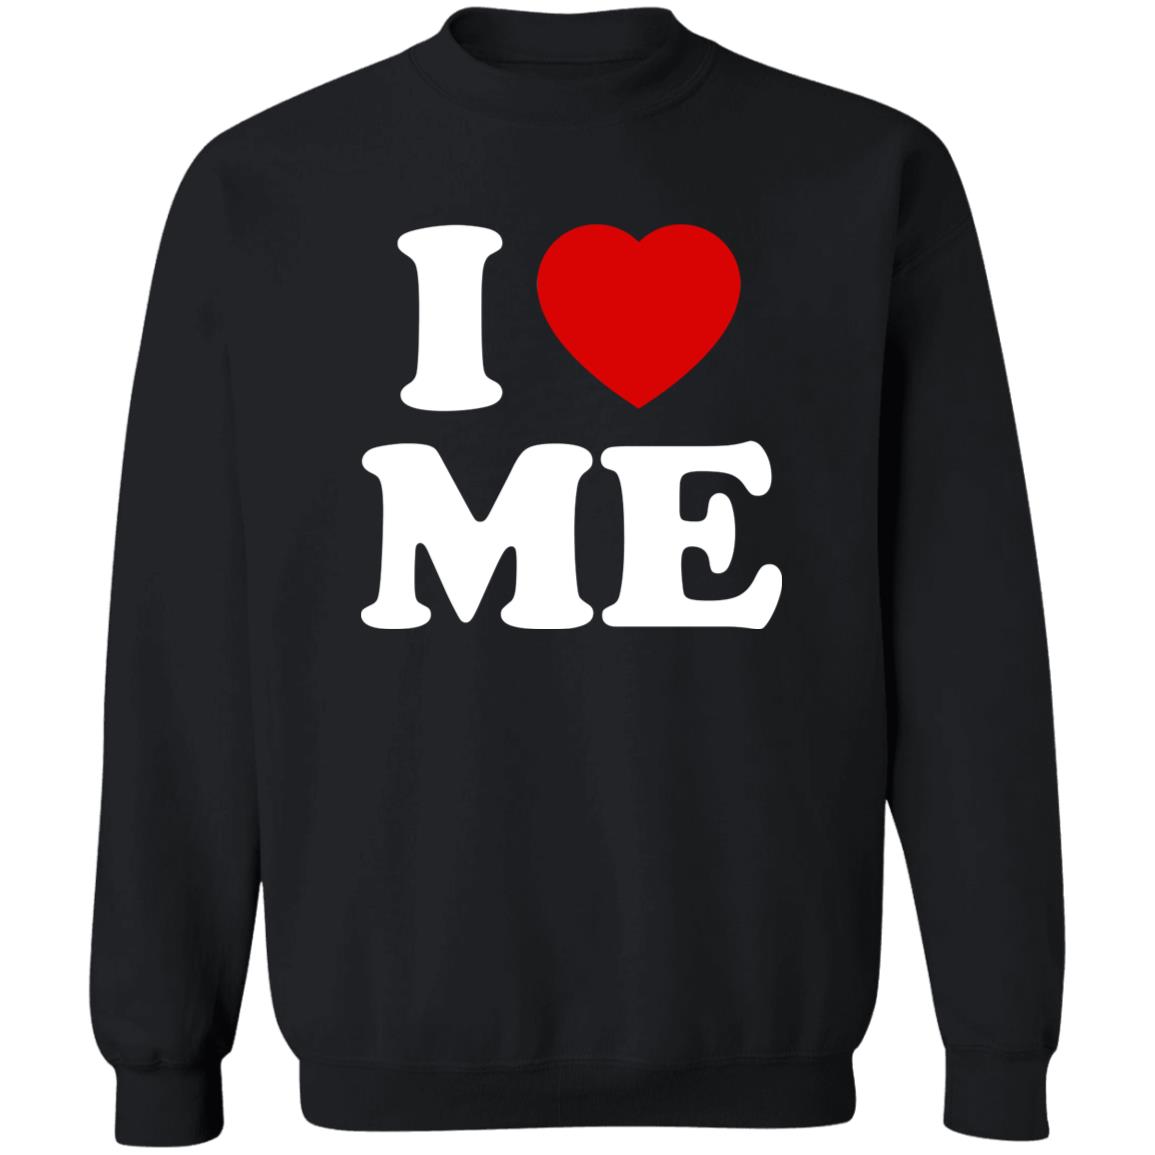 I Love Me Sweatshirt